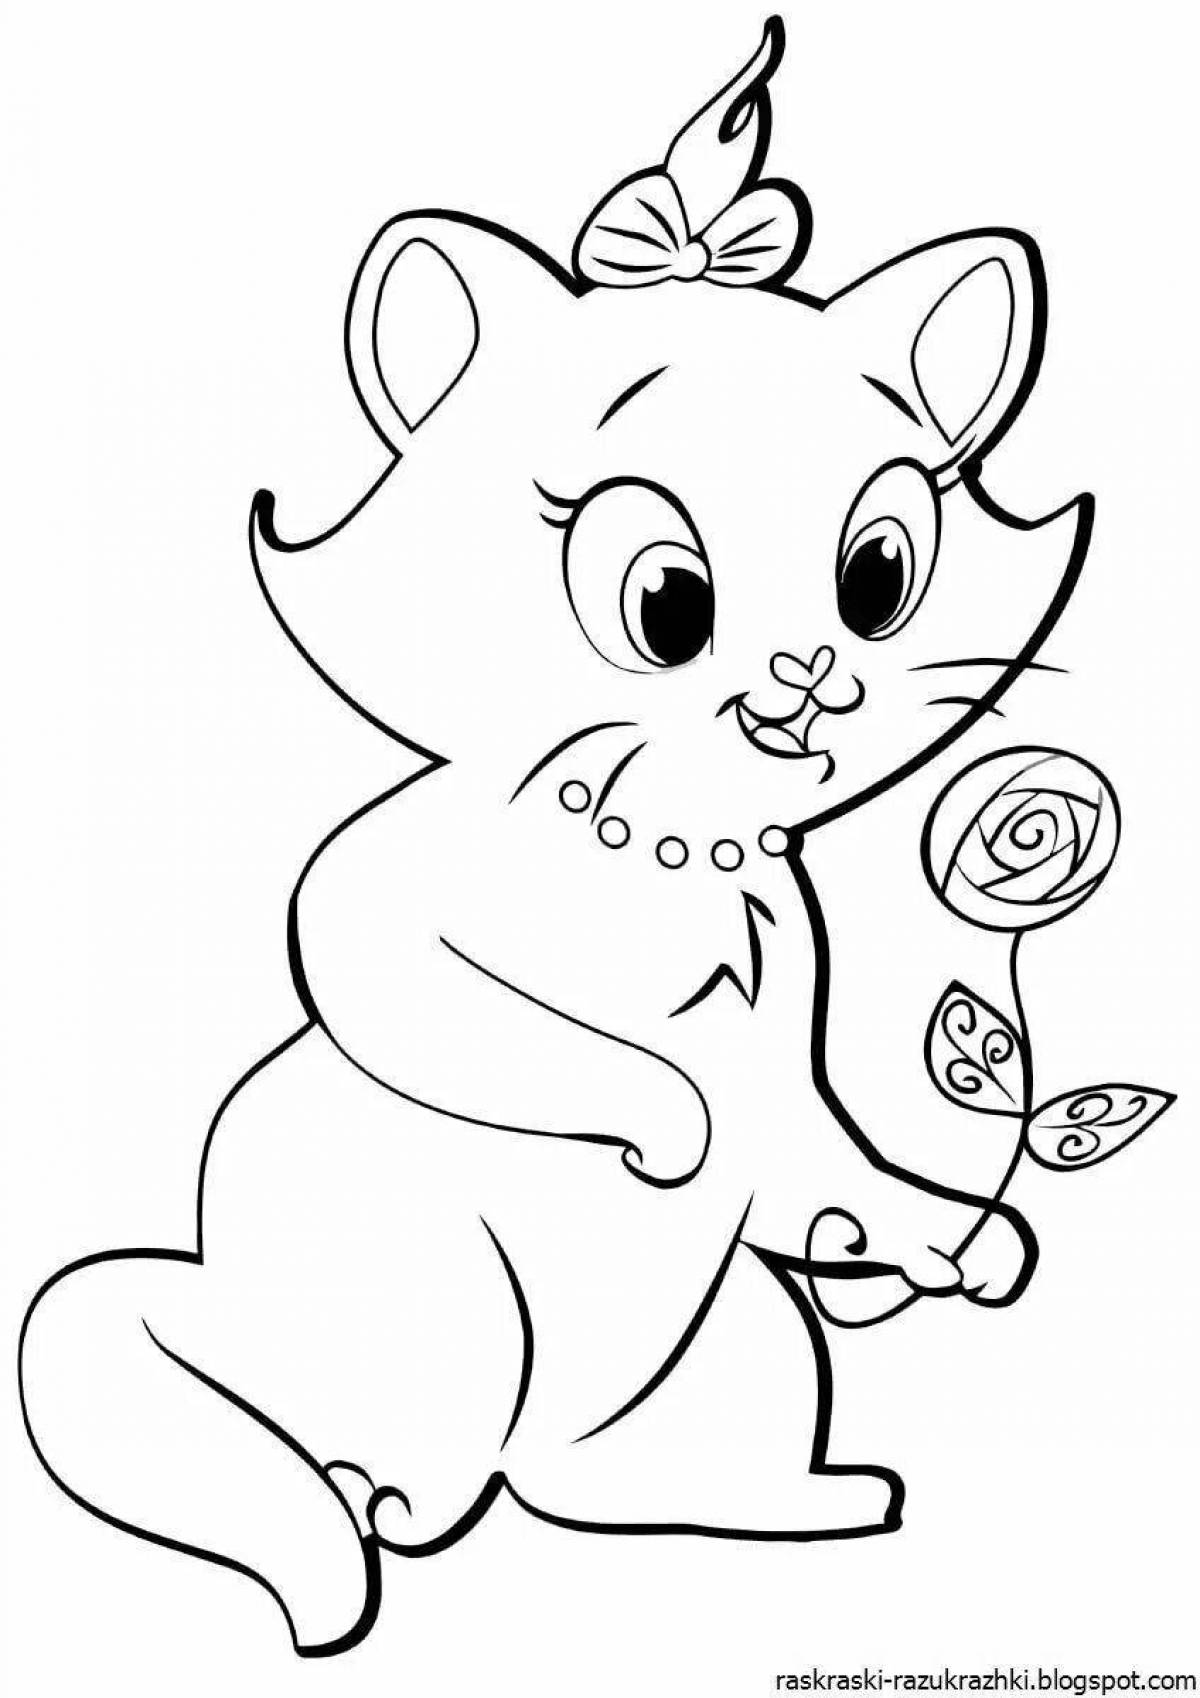 Happy coloring page cat для детей 4-5 лет